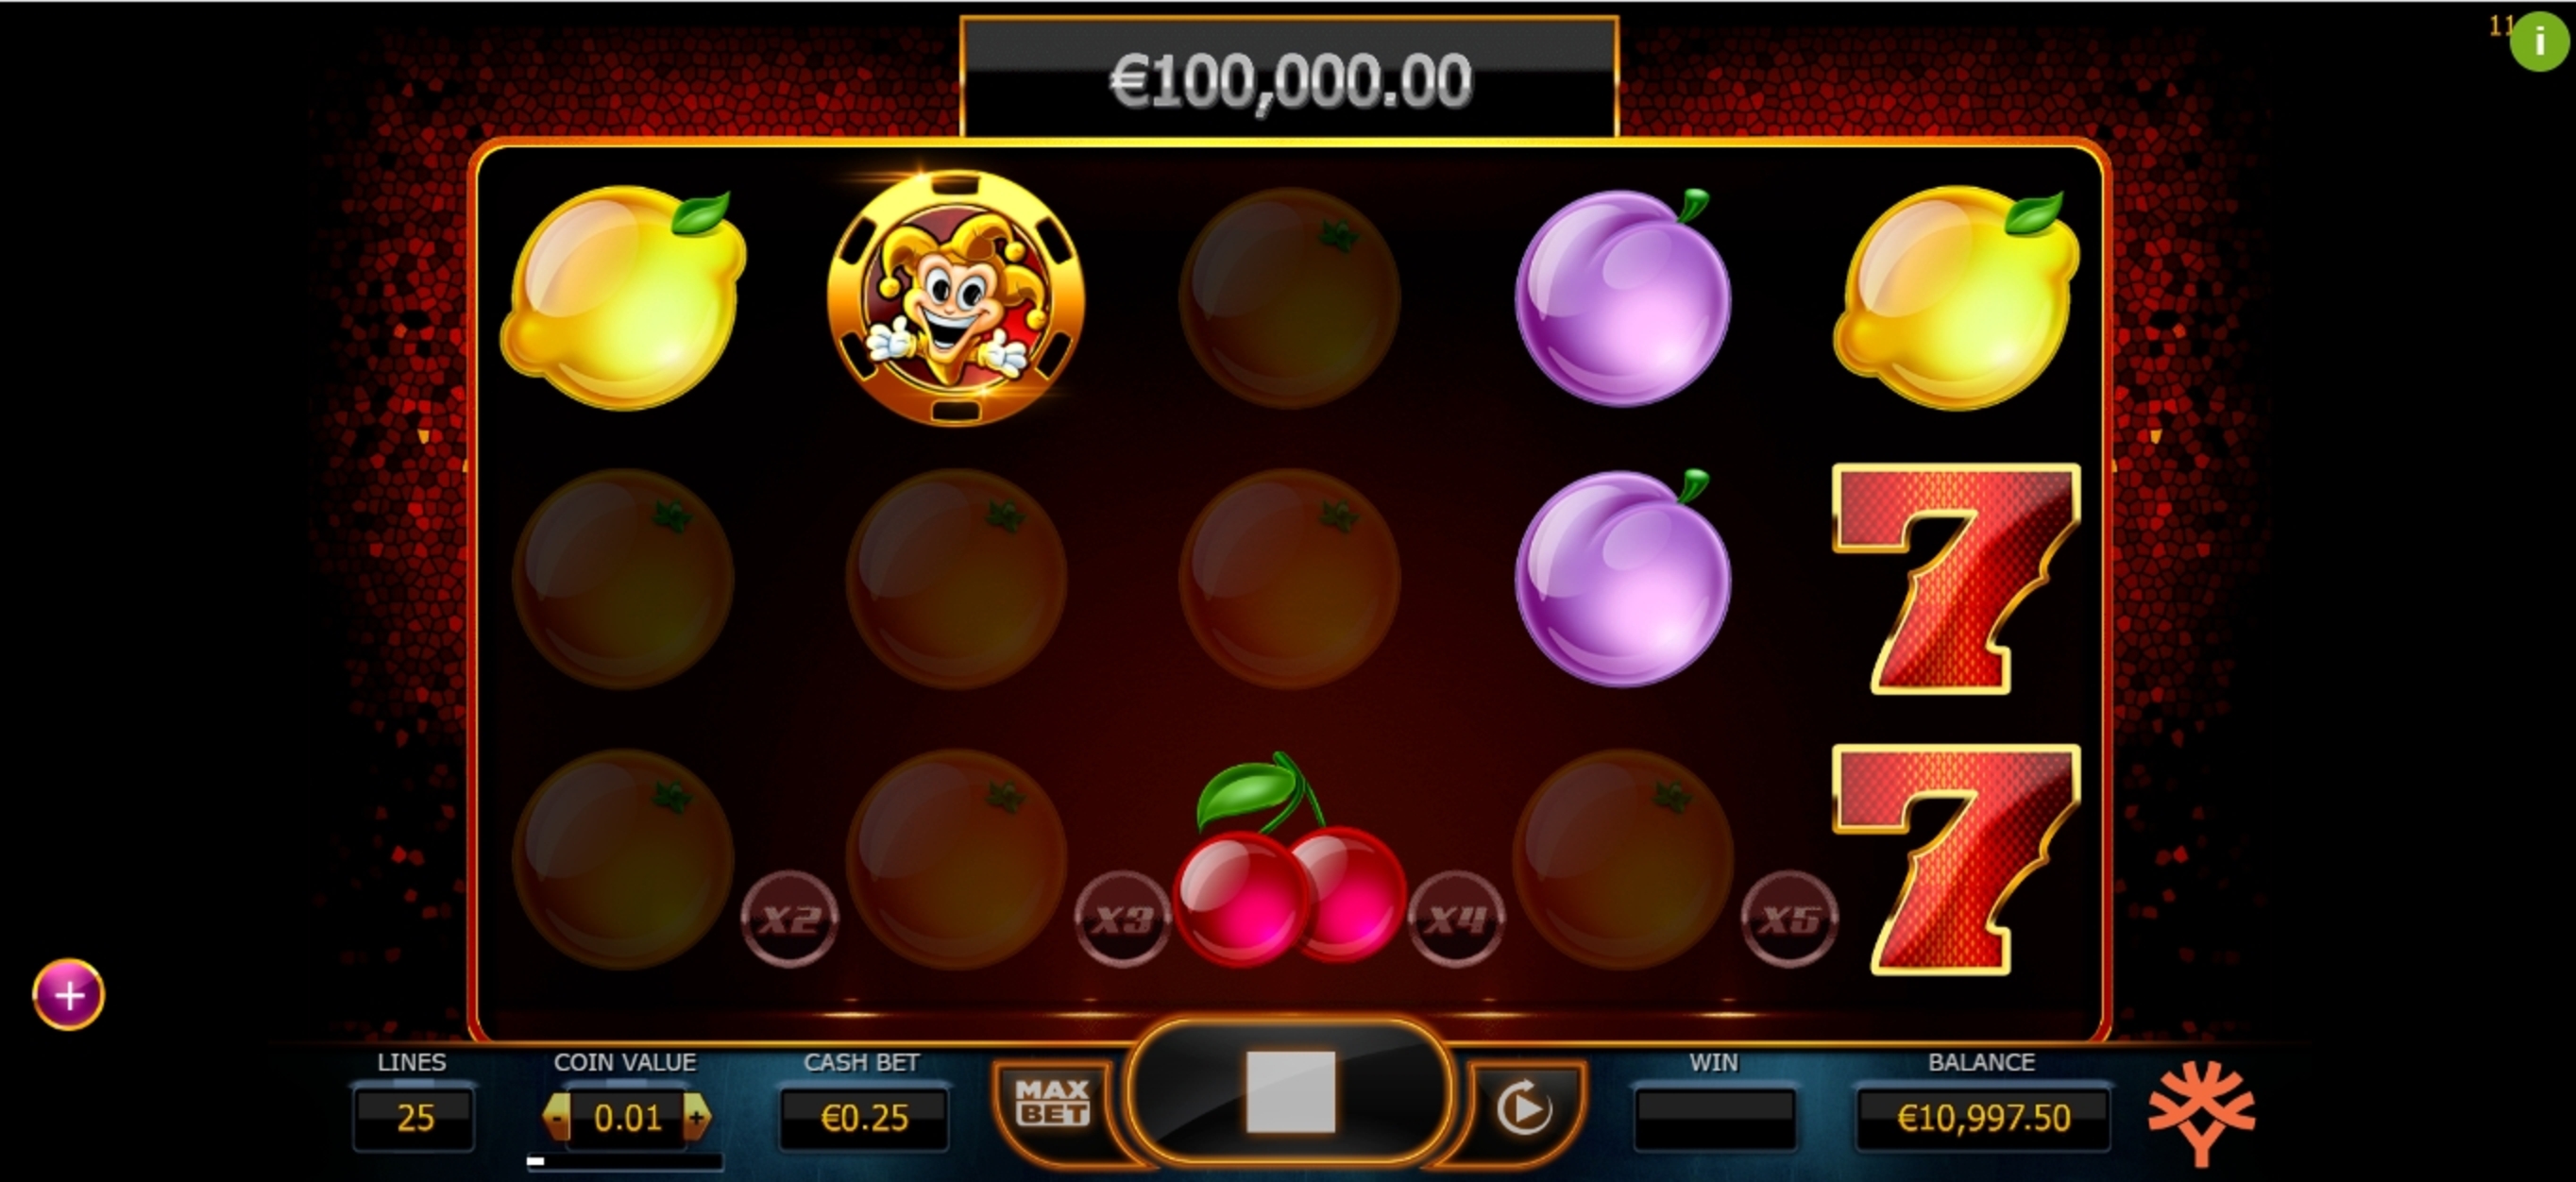 Win Money in Joker Millions Free Slot Game by Yggdrasil Gaming